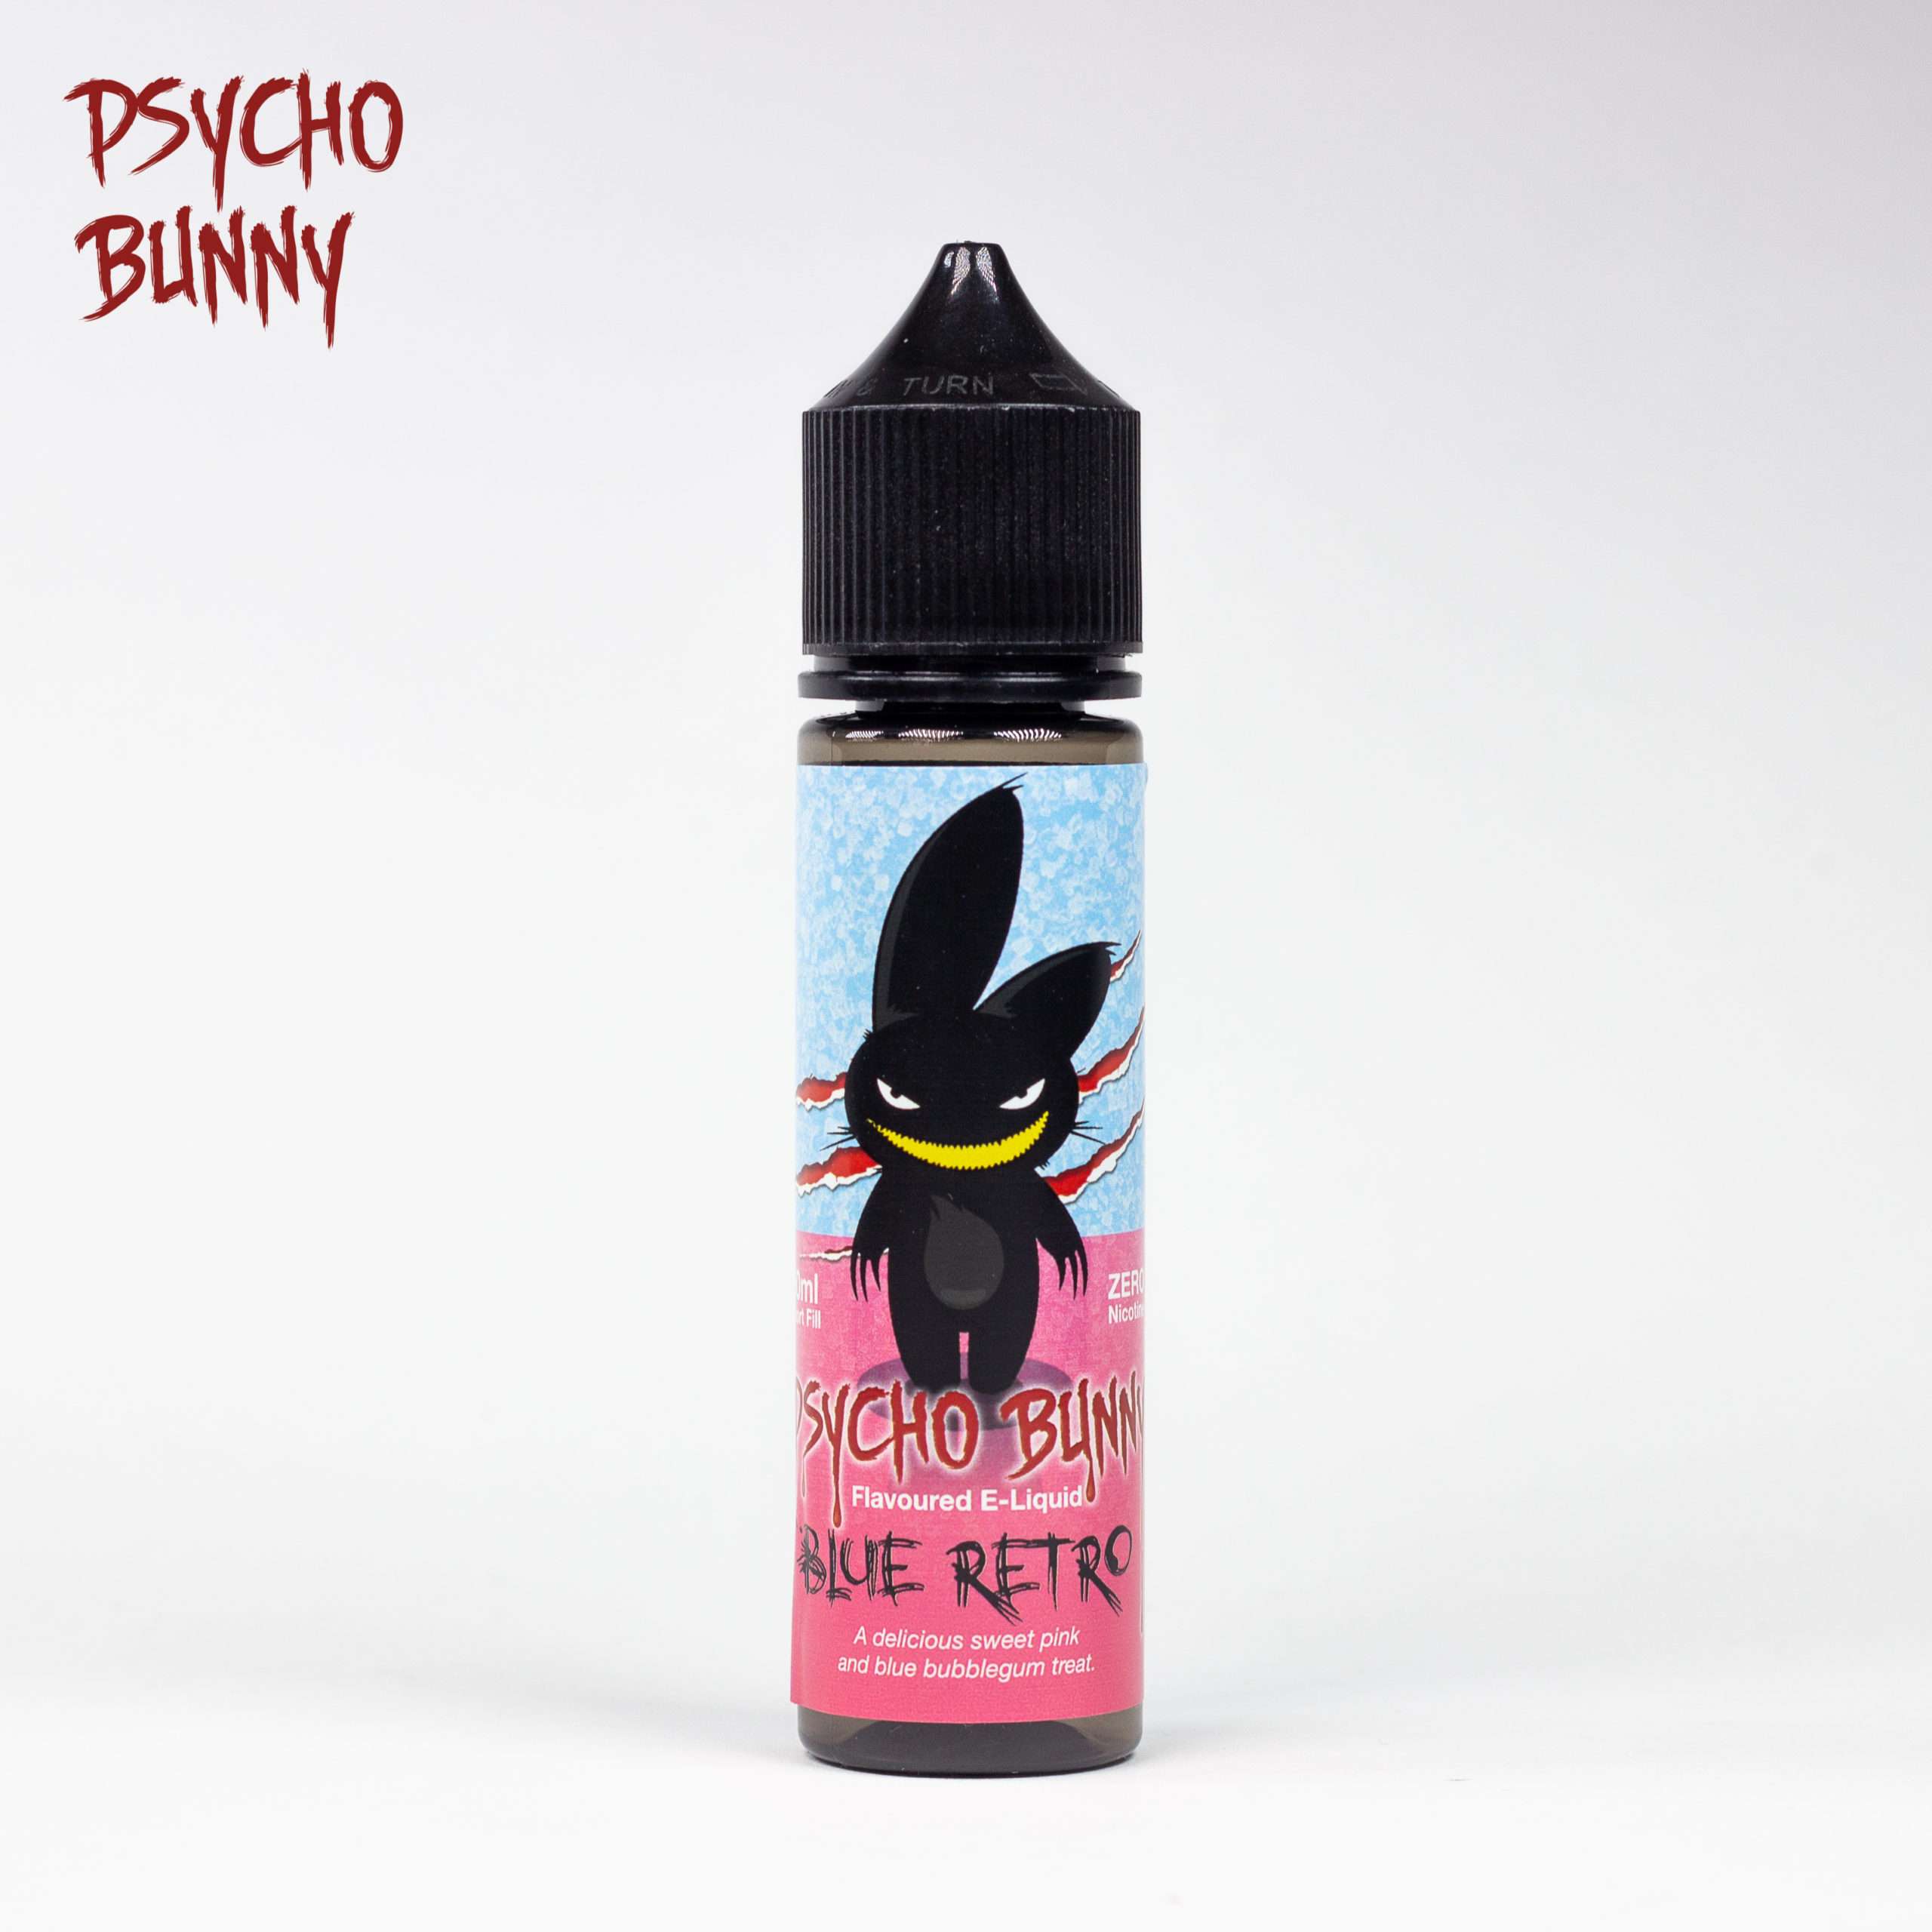  Psycho Bunny - Blue Retro  - 50ml 